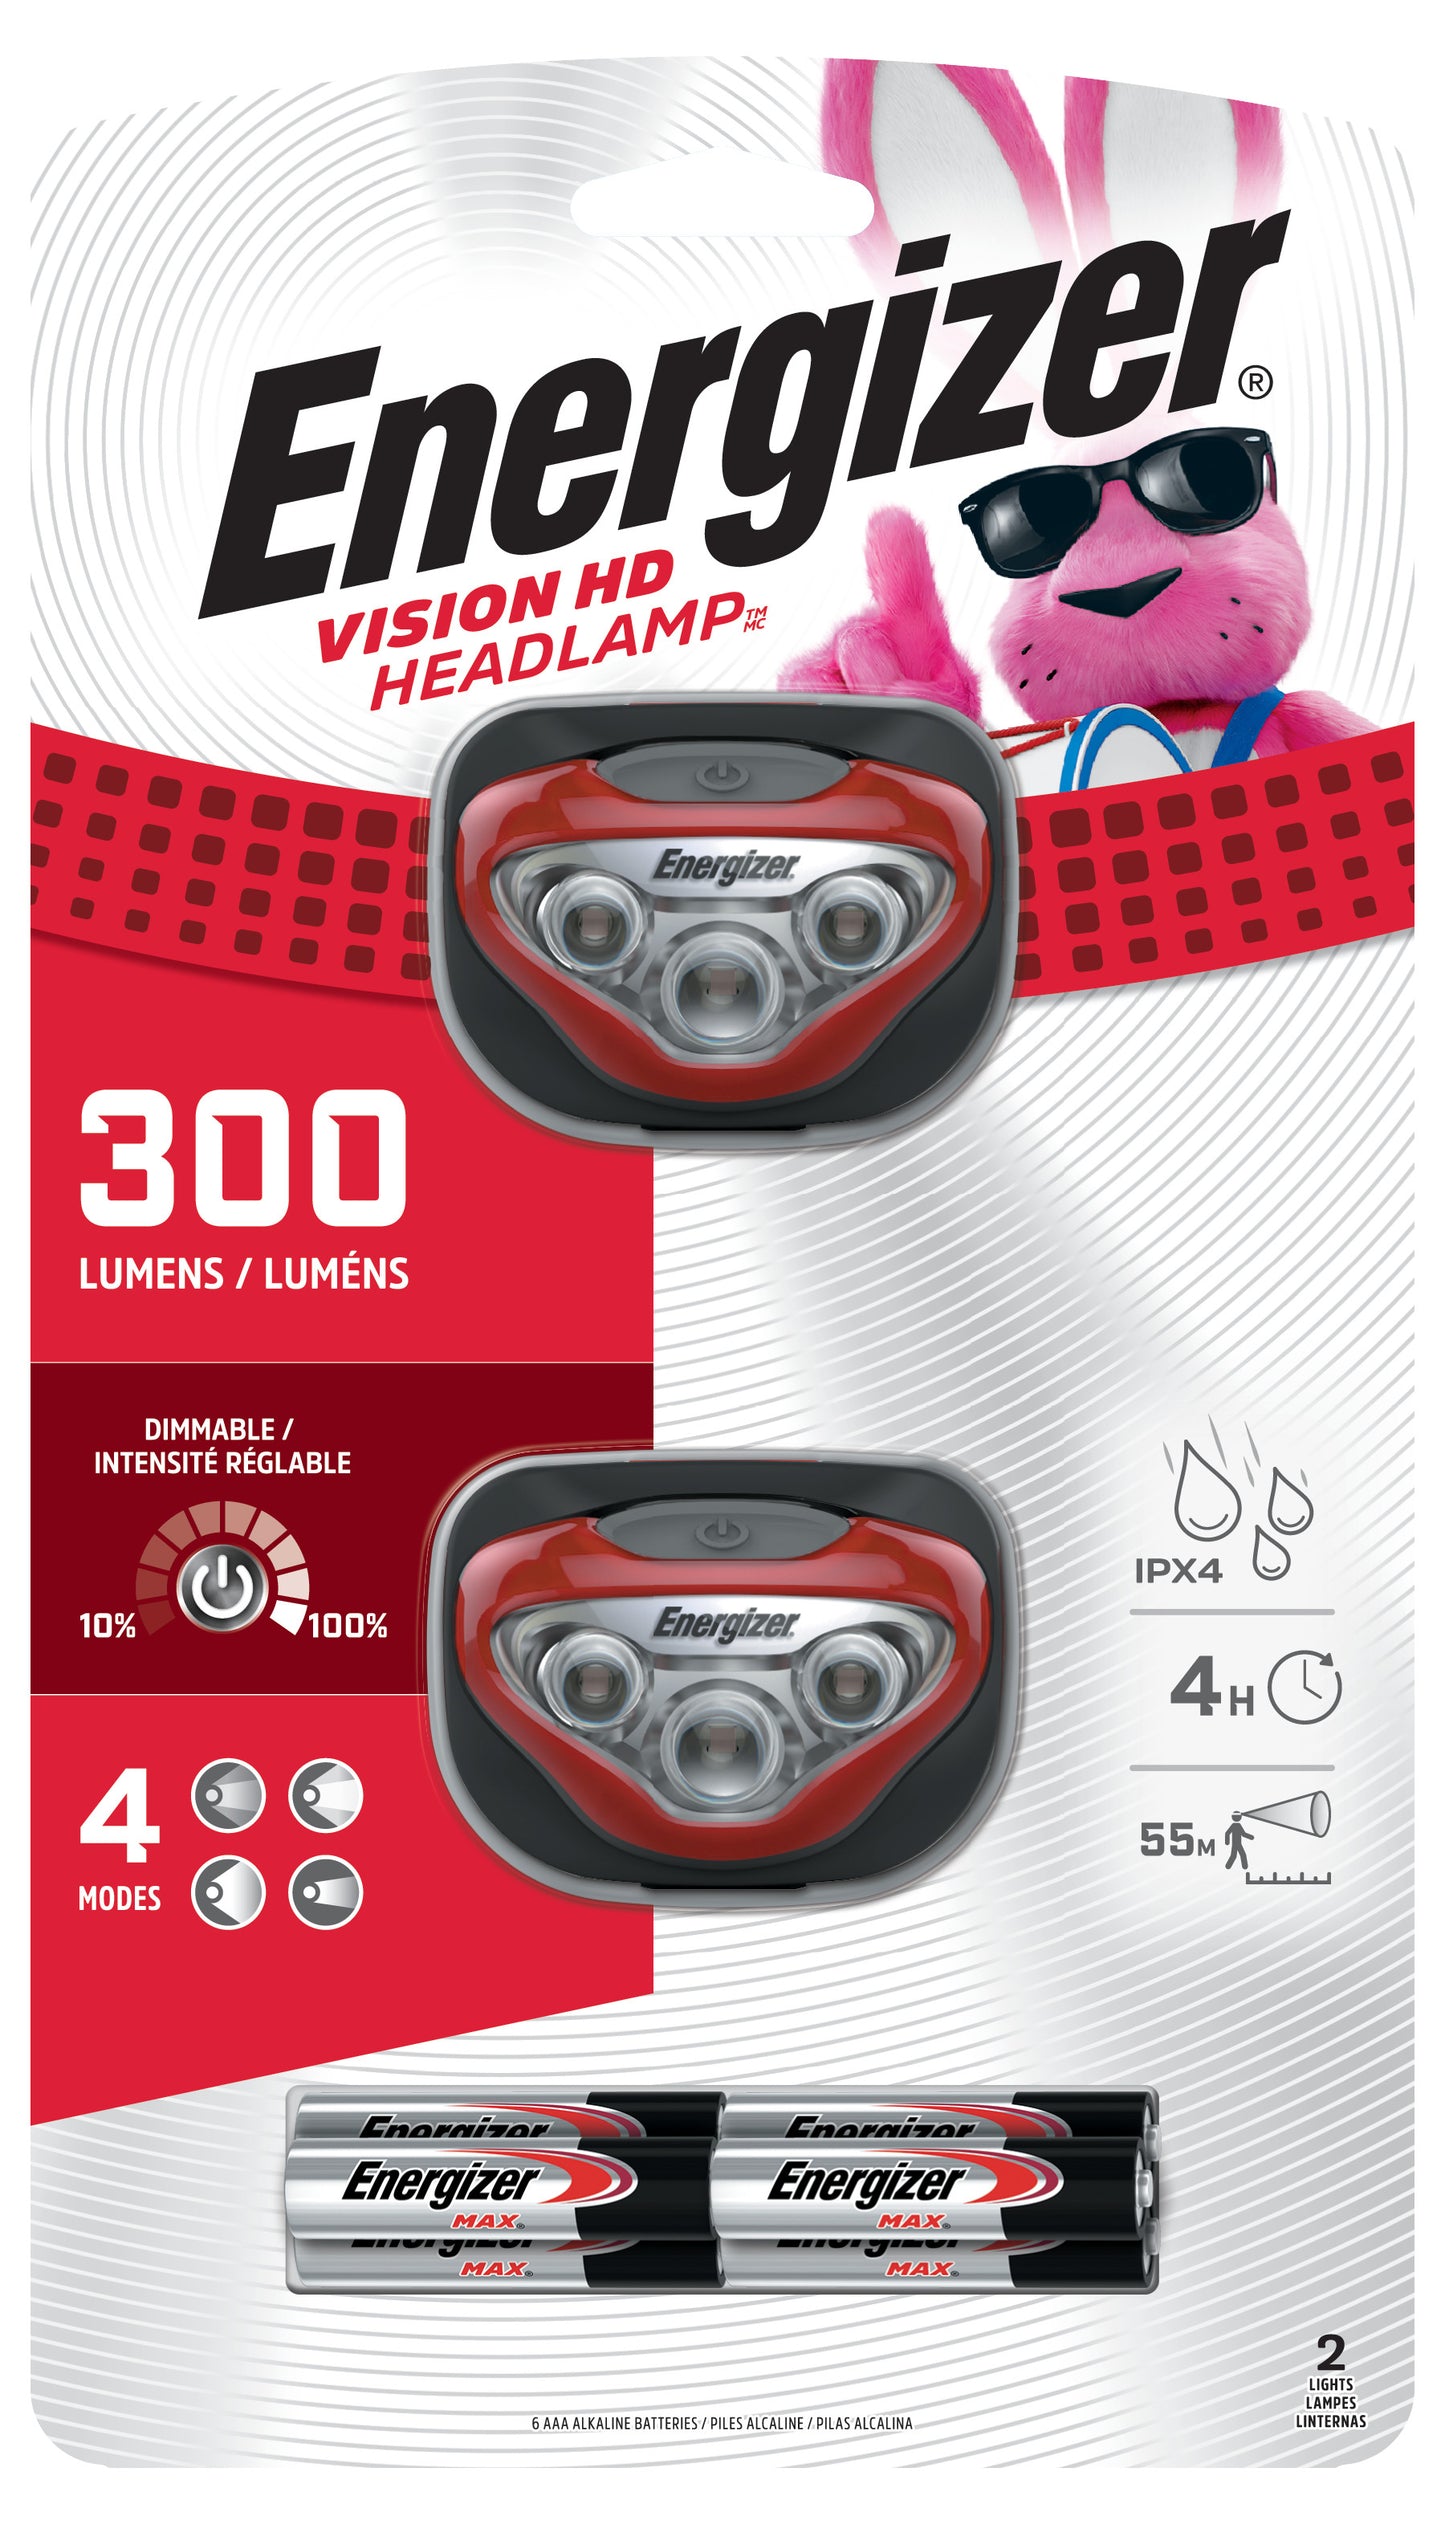 Energizer Vision HD LED Headlamp 2 Pack